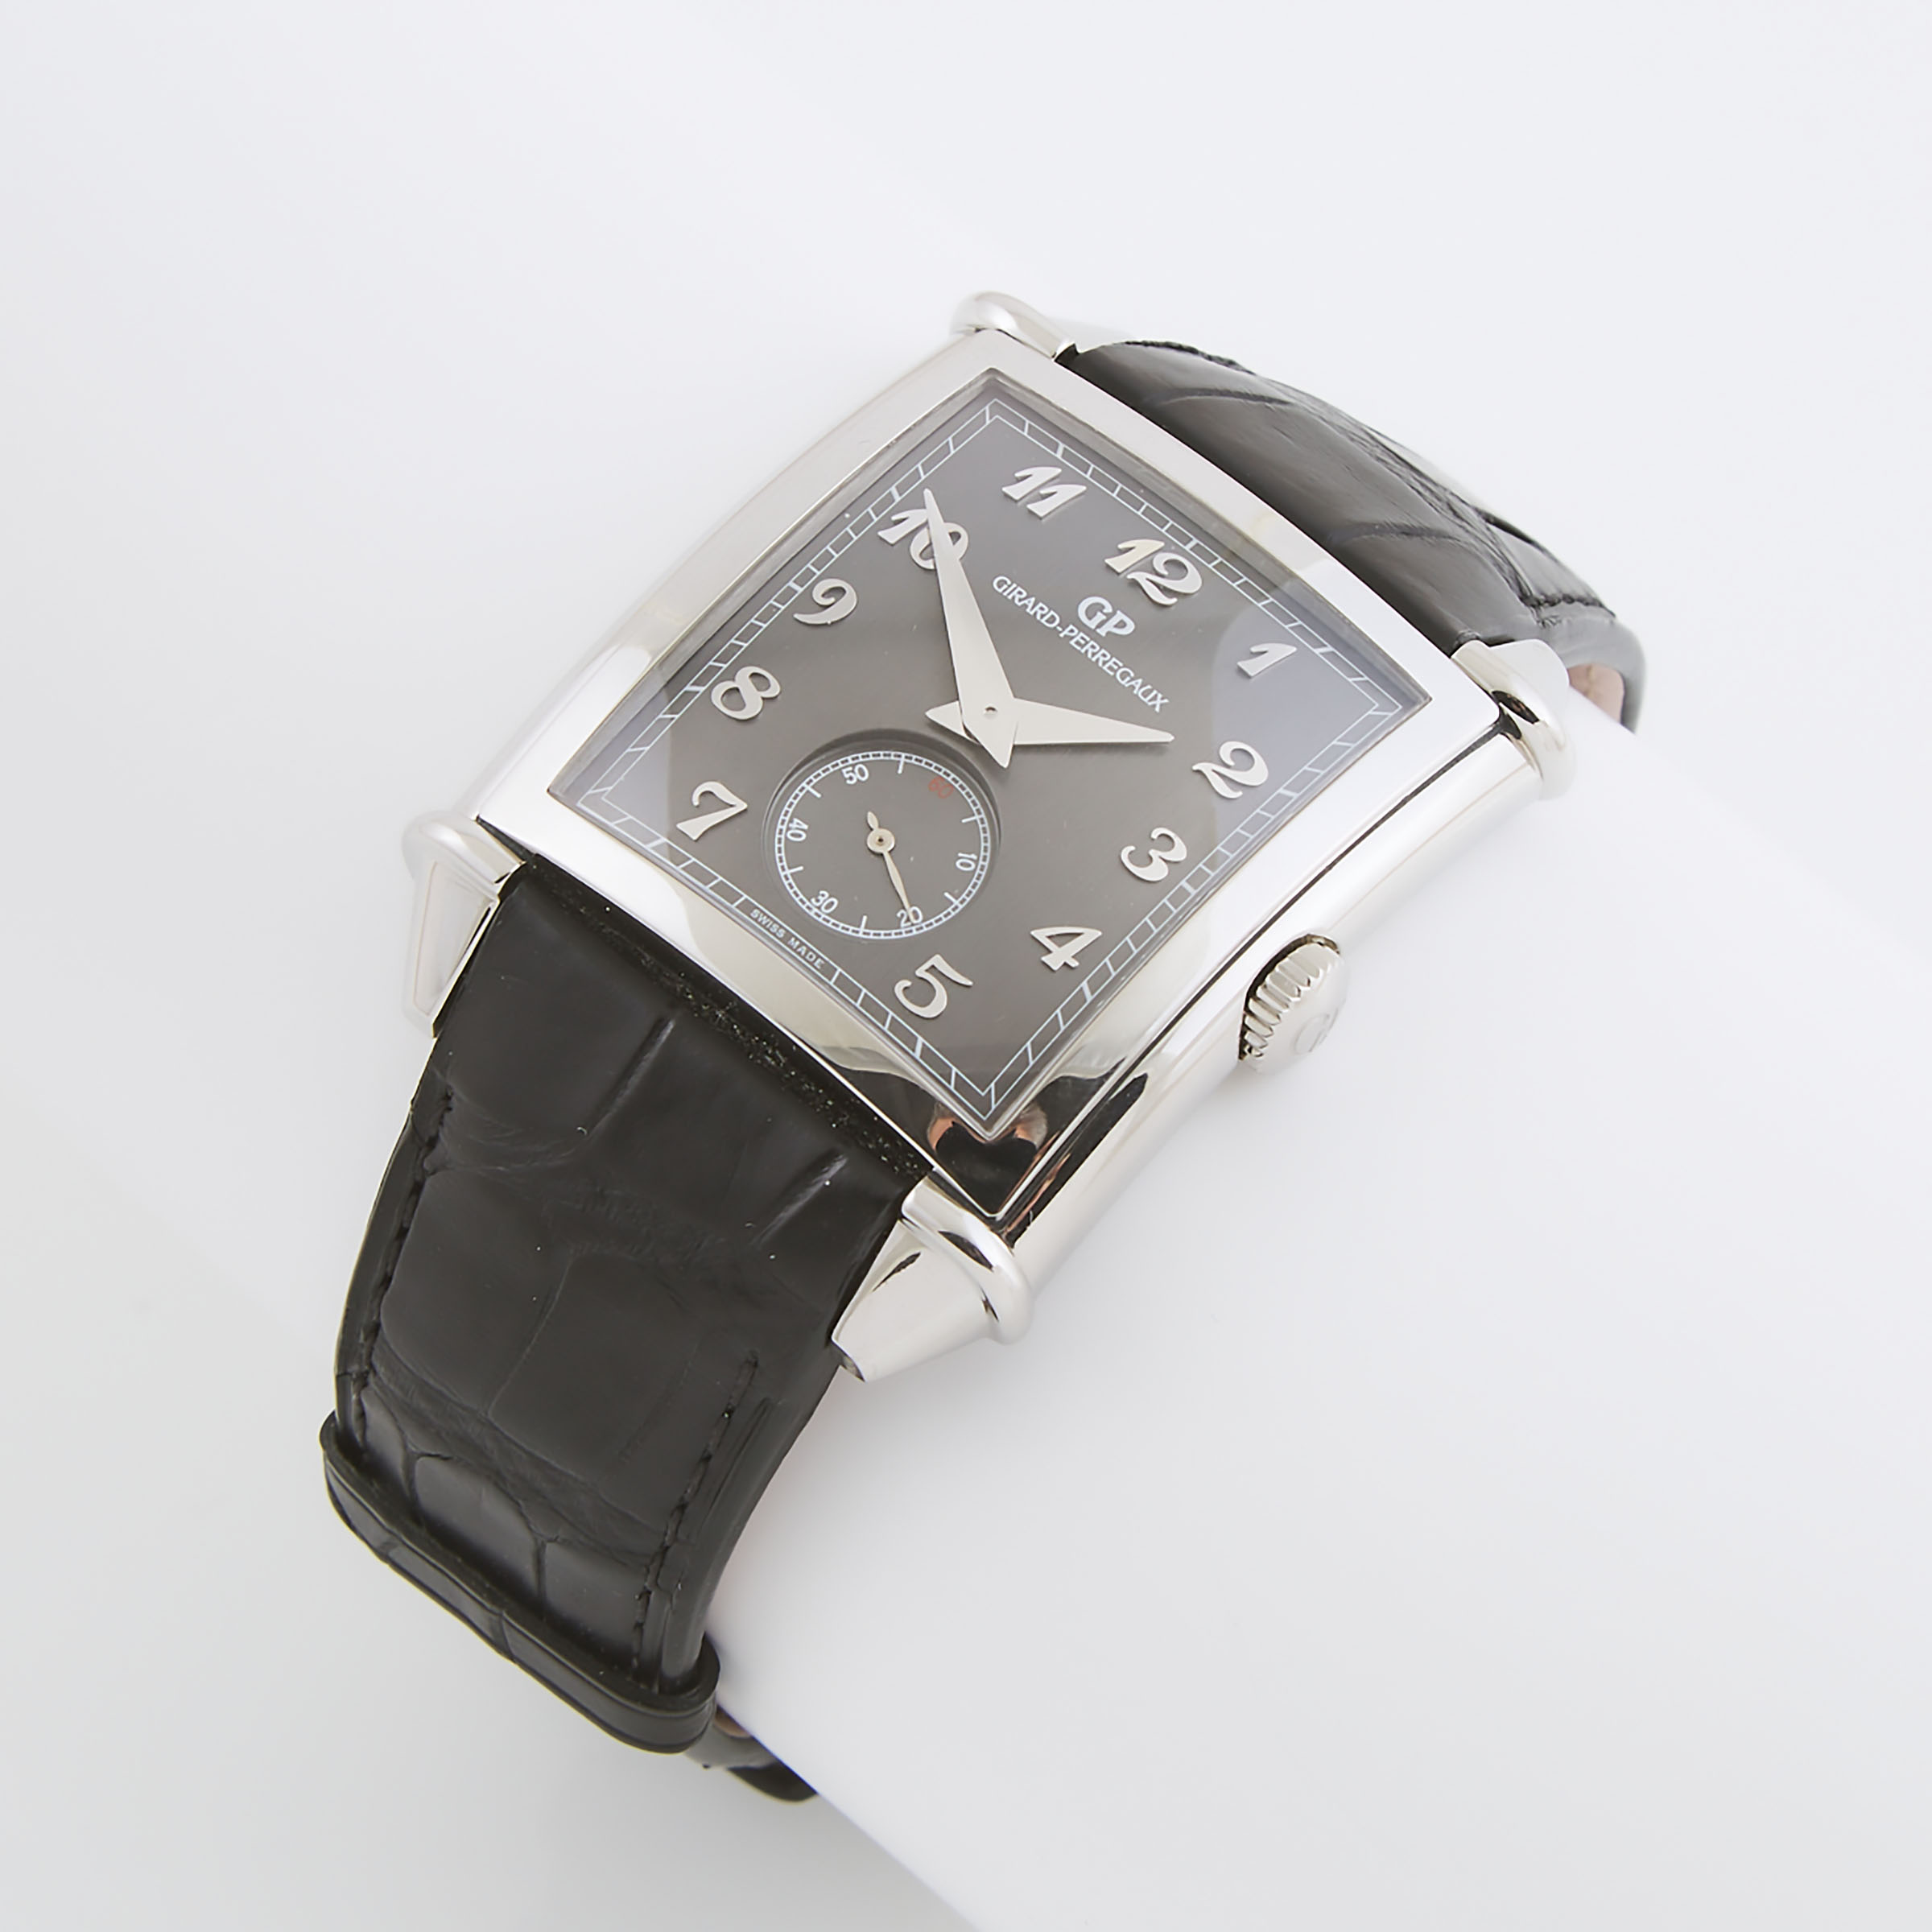 Girard-Perregaux Vintage 1945 Wristwatch